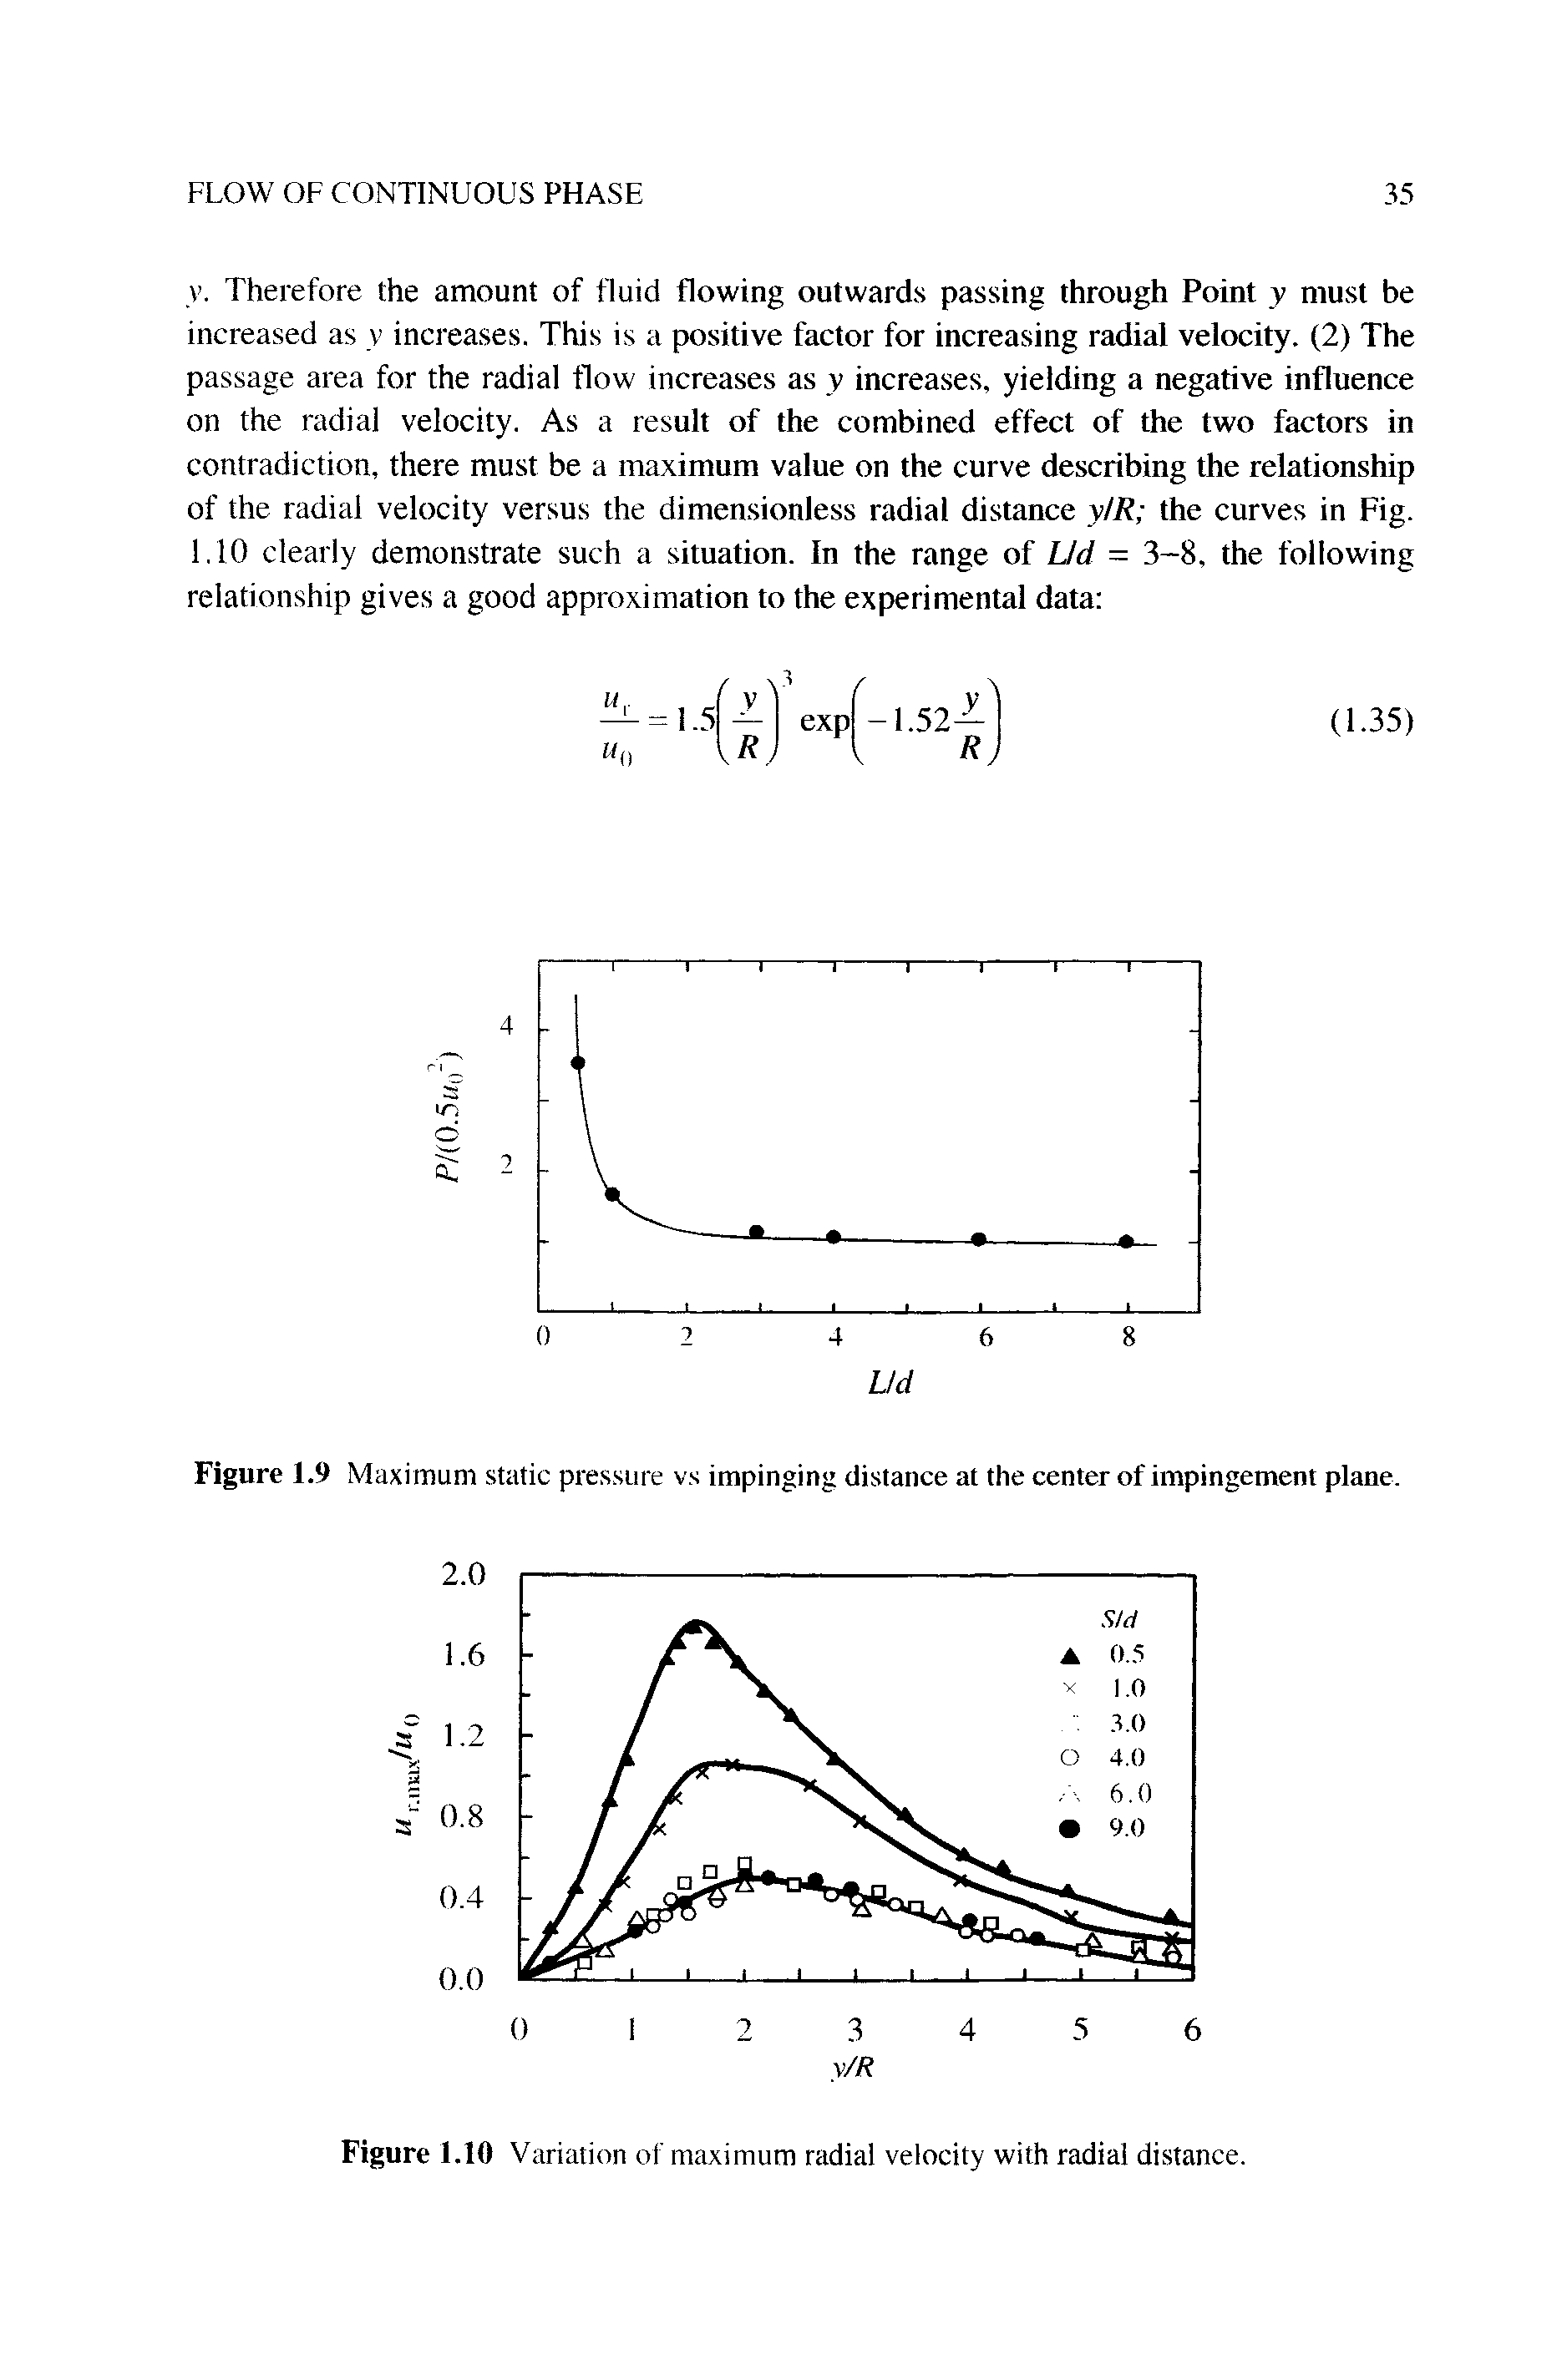 Figure 1.9 Maxi mum static pressure vs impinging distance at the center of impingement plane.